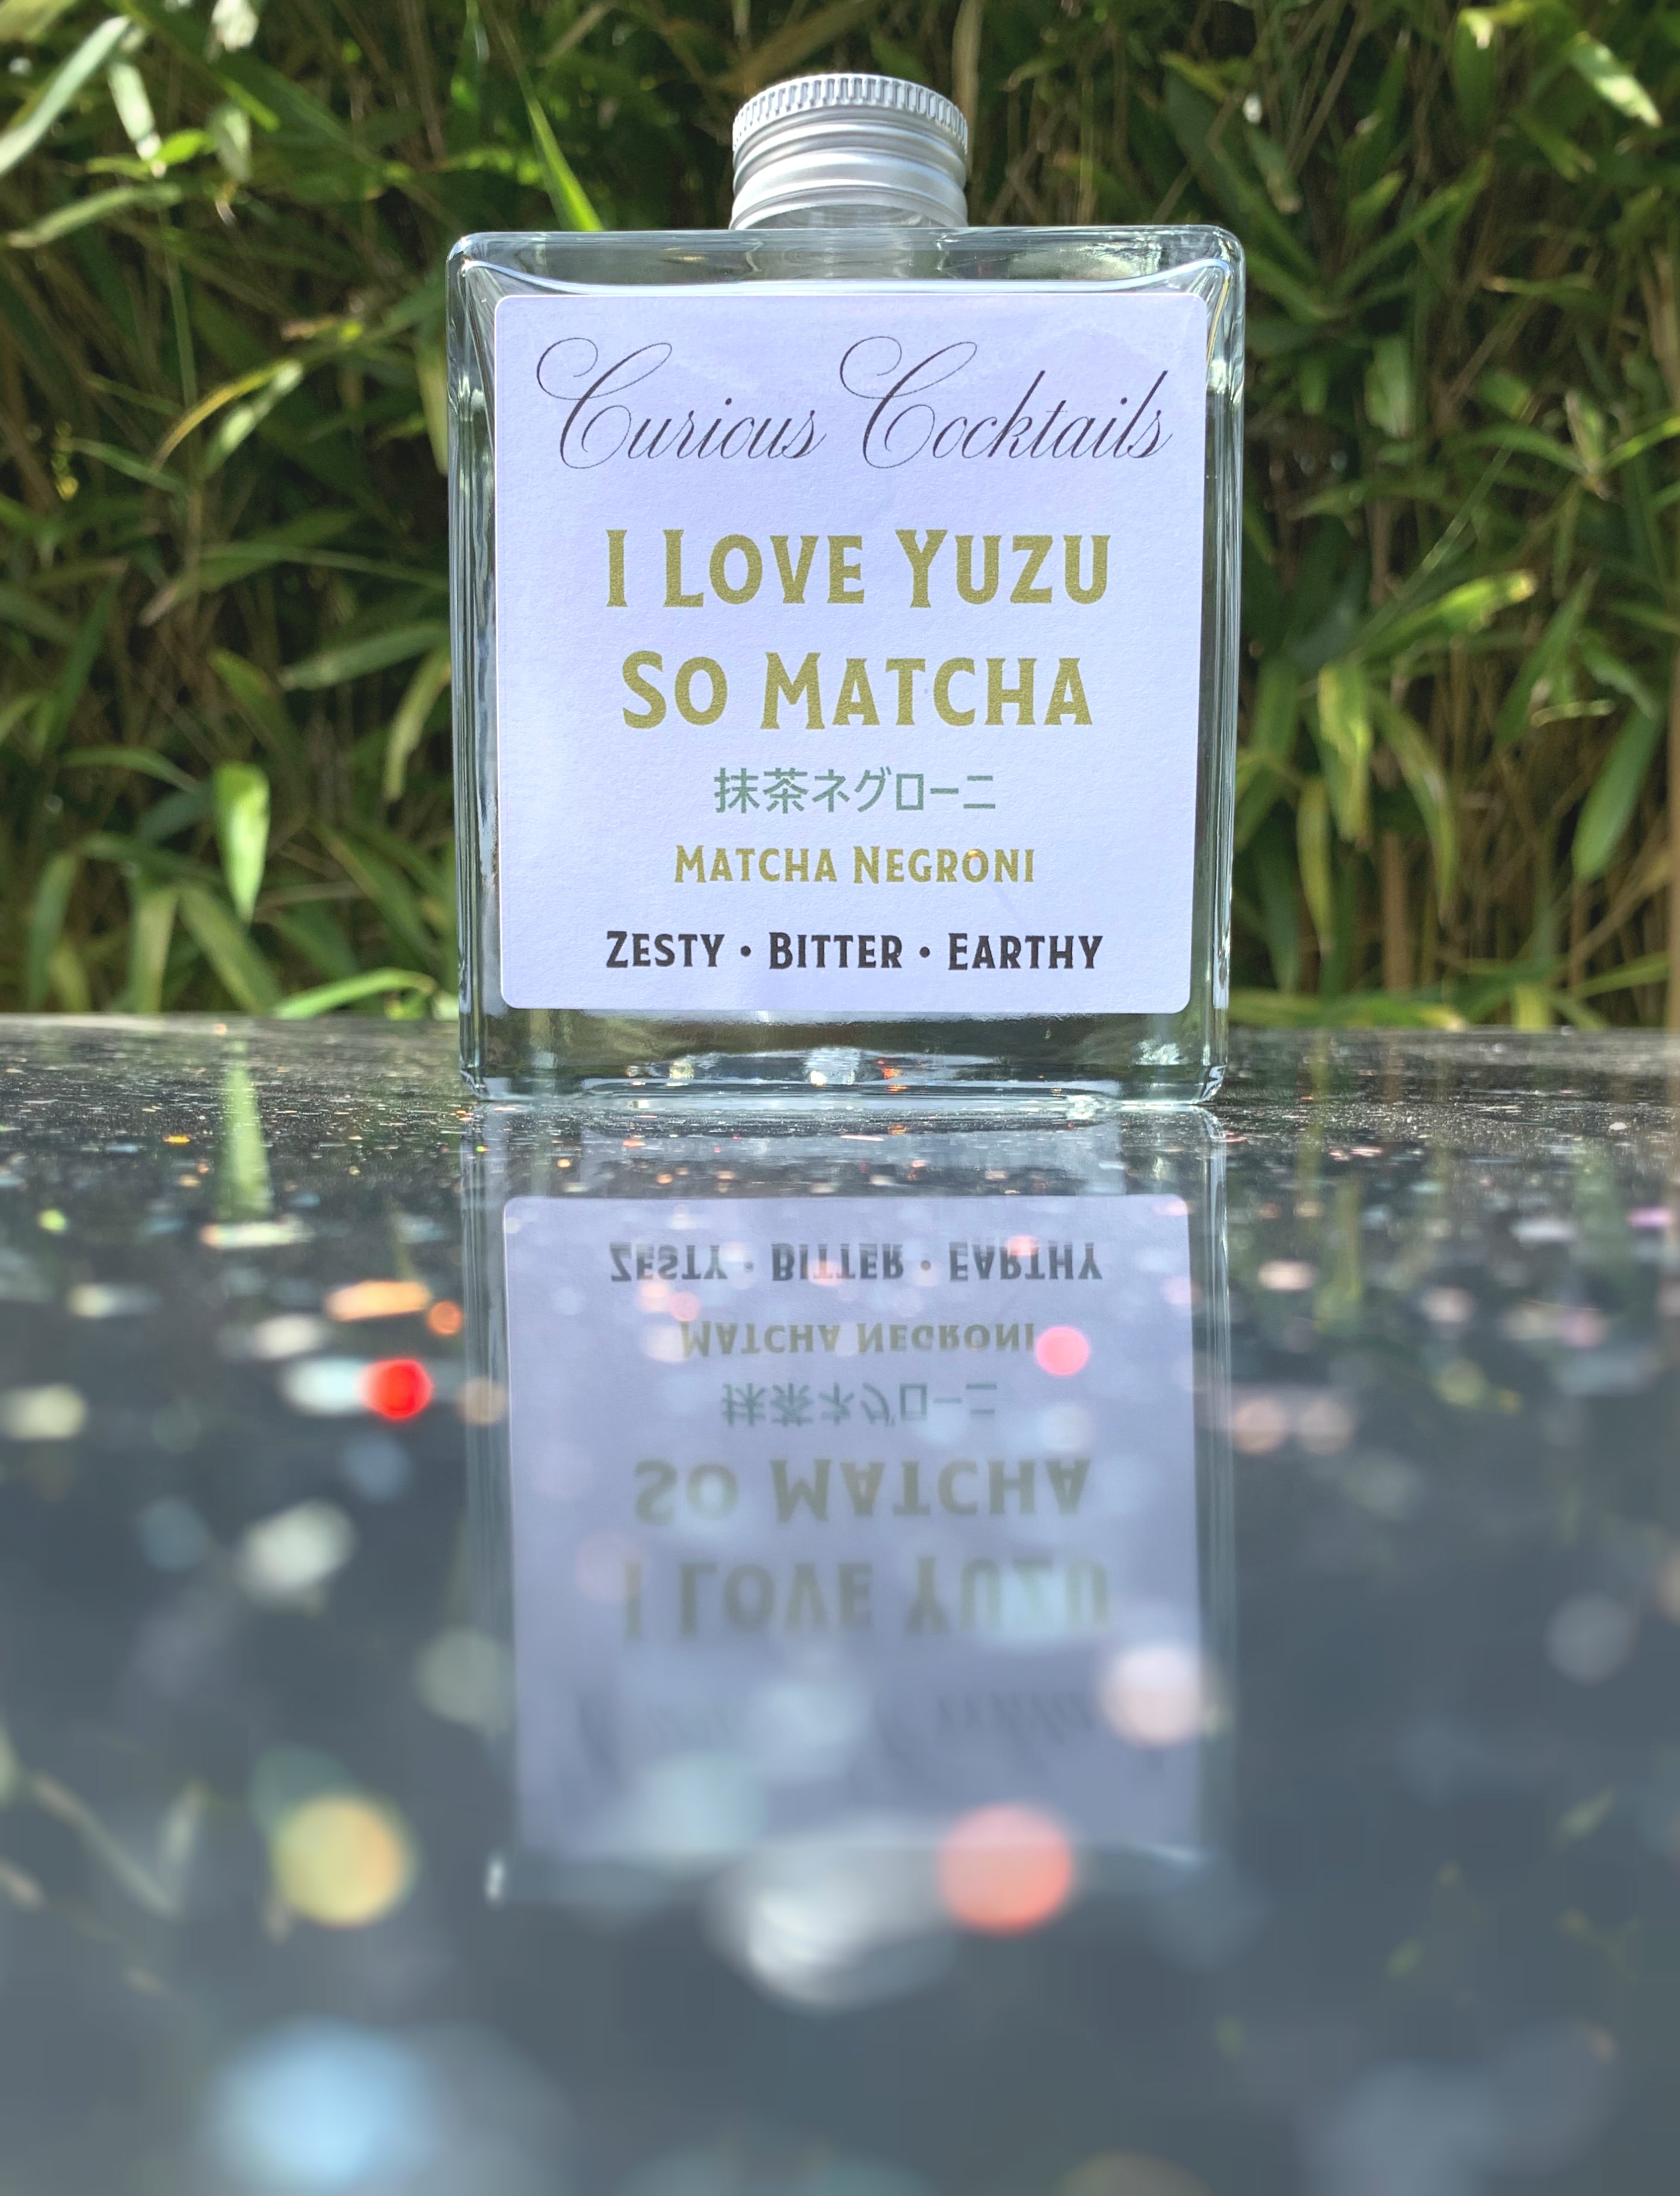 Curious Cocktails: I Love Yuzu So Matcha Negroni 500ml Glass Bottle (Save £10)